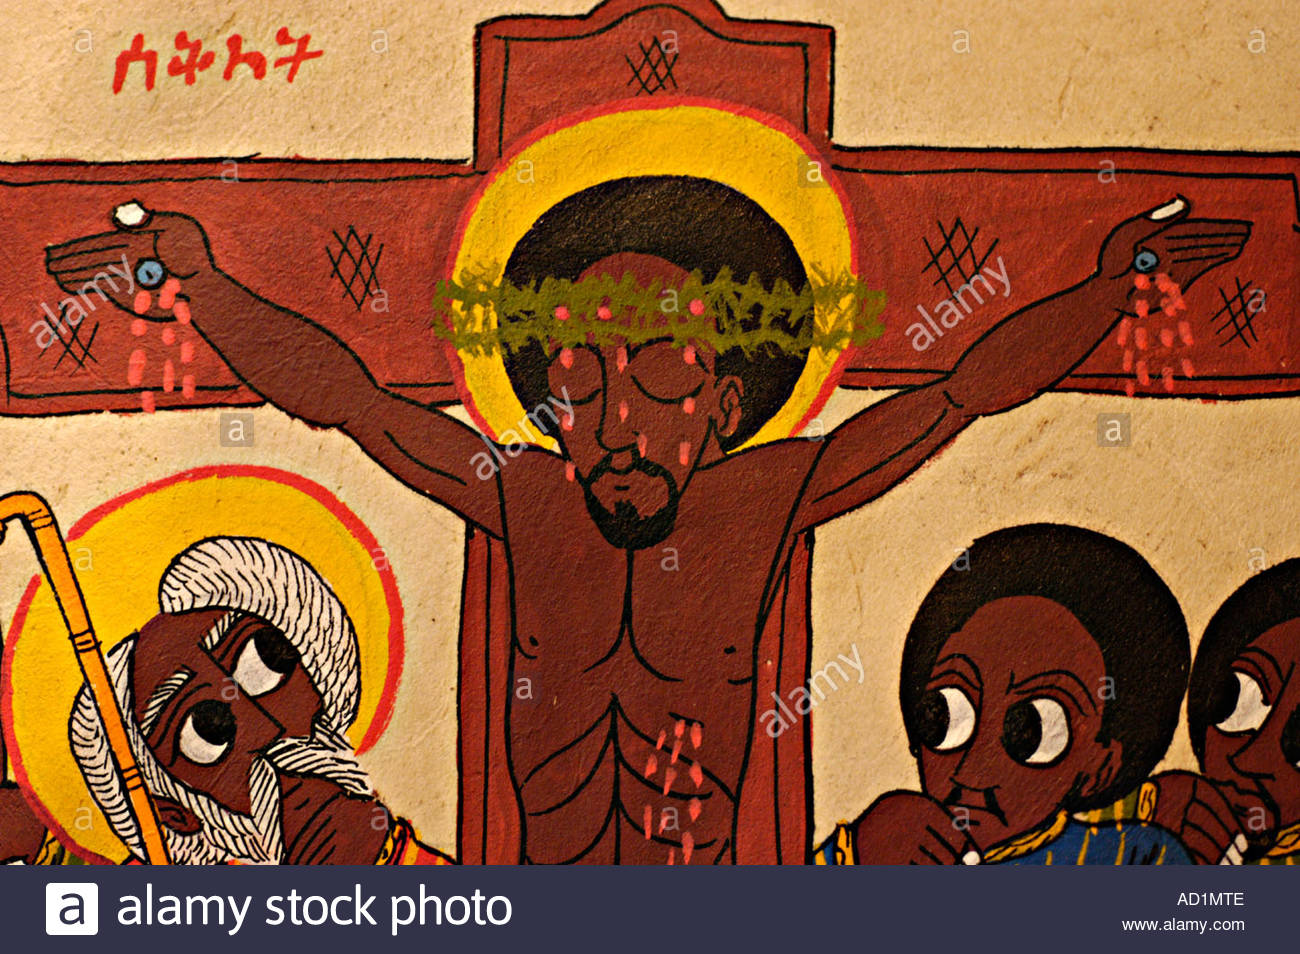 ethiopian-orthodox-church-fresco-painting-with-black-jesus-christ-AD1MTE.jpg